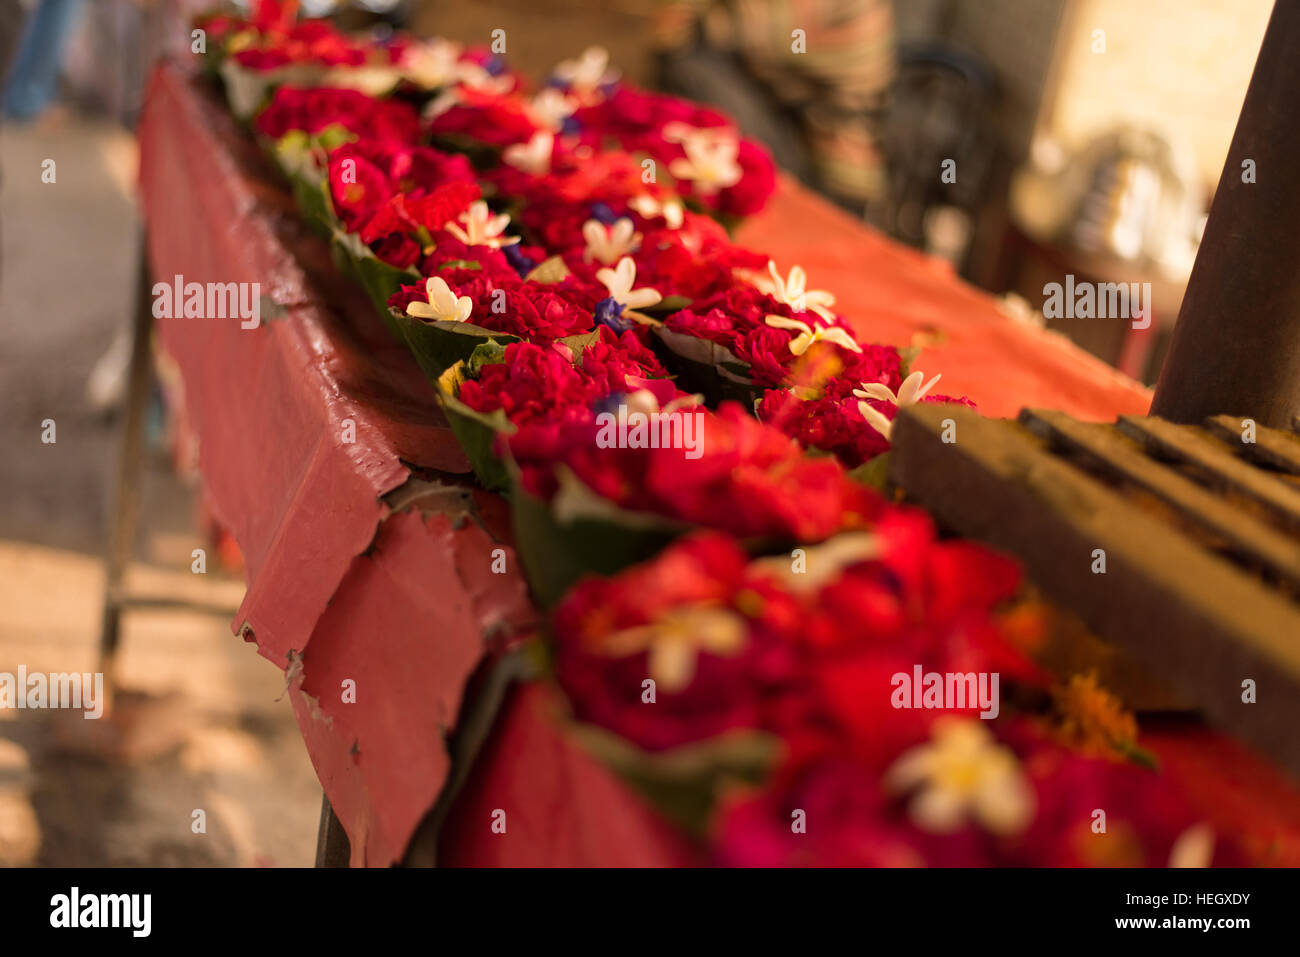 Rose, Flowers, Basket of Flowers, Flower Basket, Flower, Roses, Cute Flowers, Red Flowers Stock Photo